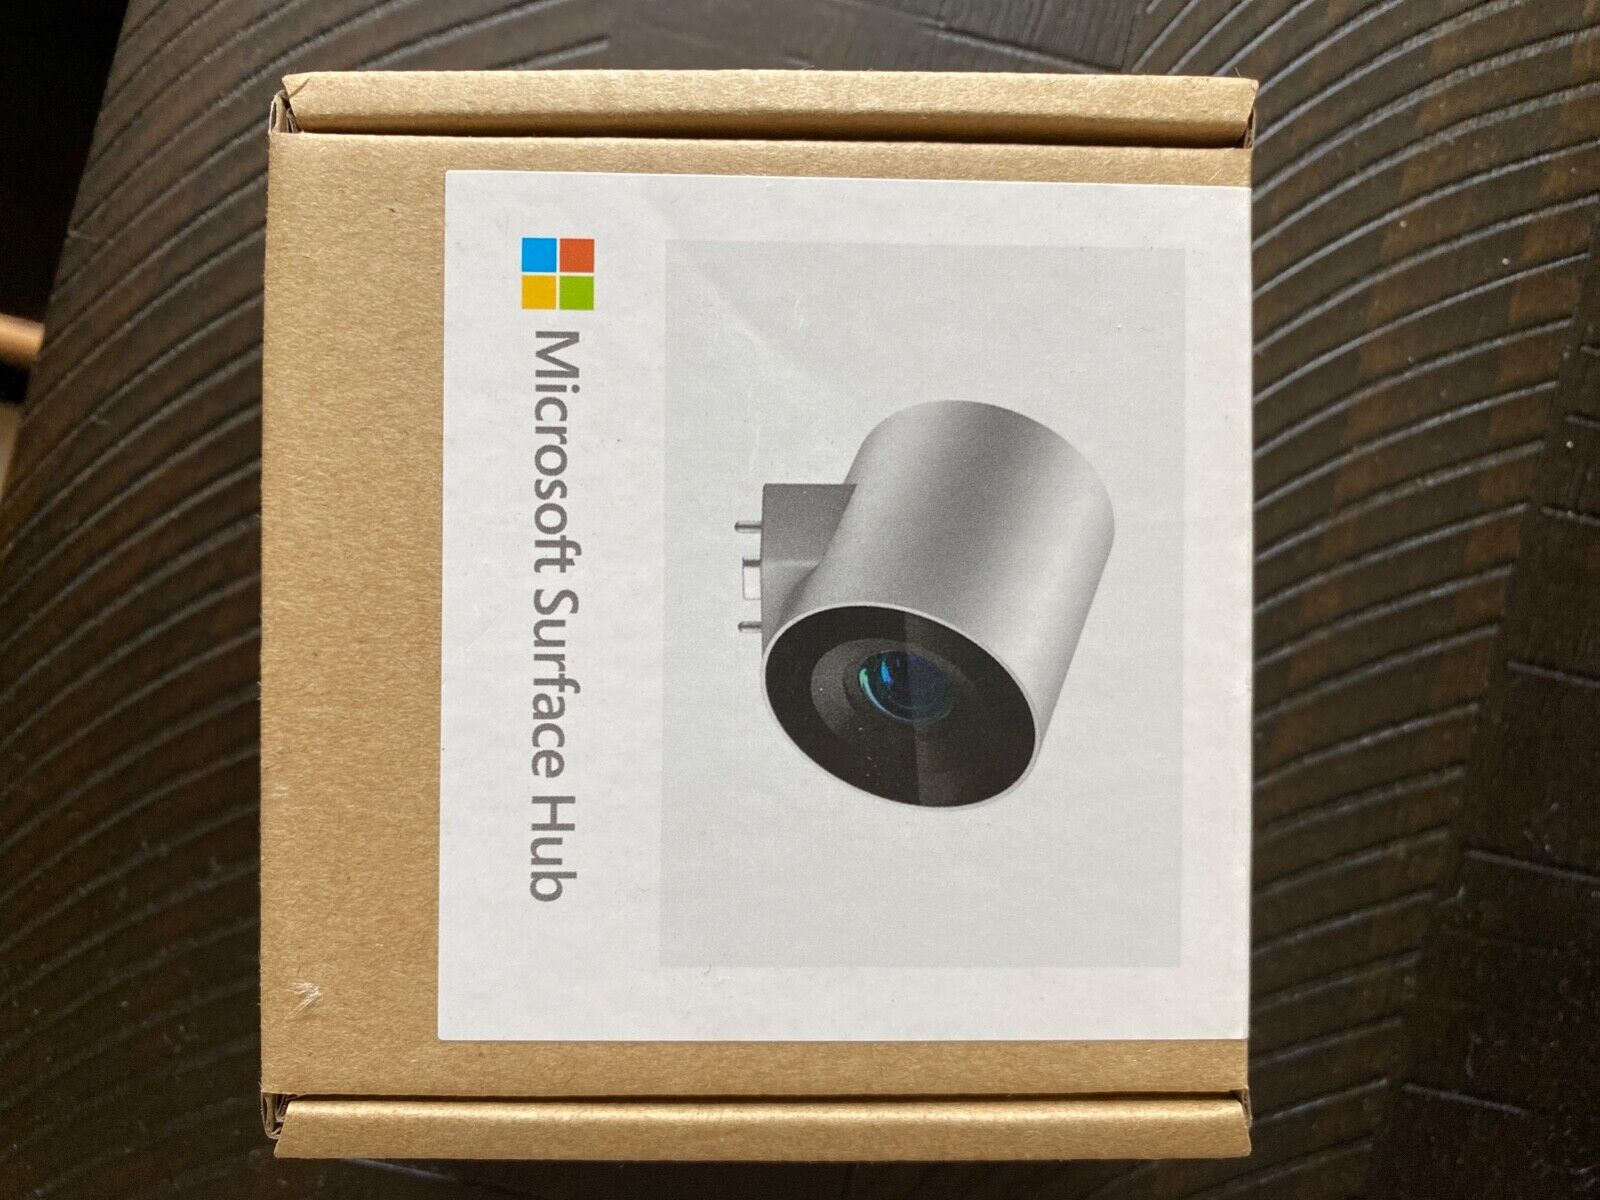 Microsoft hub 2 camera